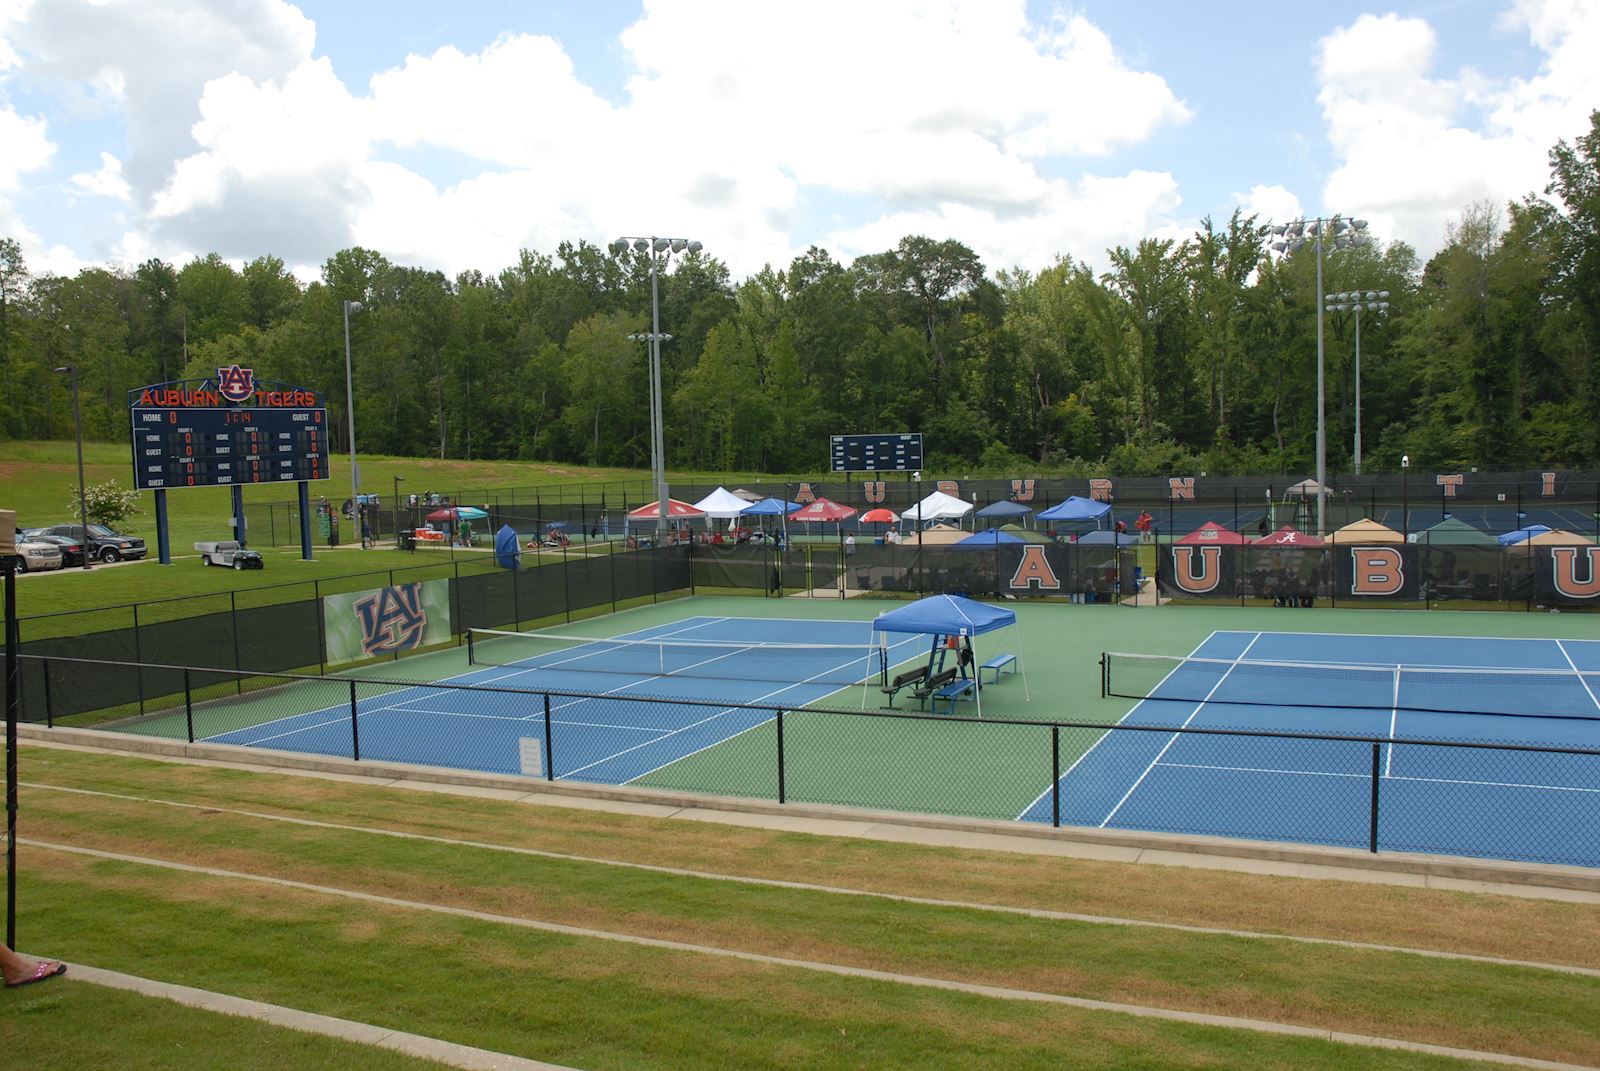 City of Auburn Alabama Yarbrough Tennis Center